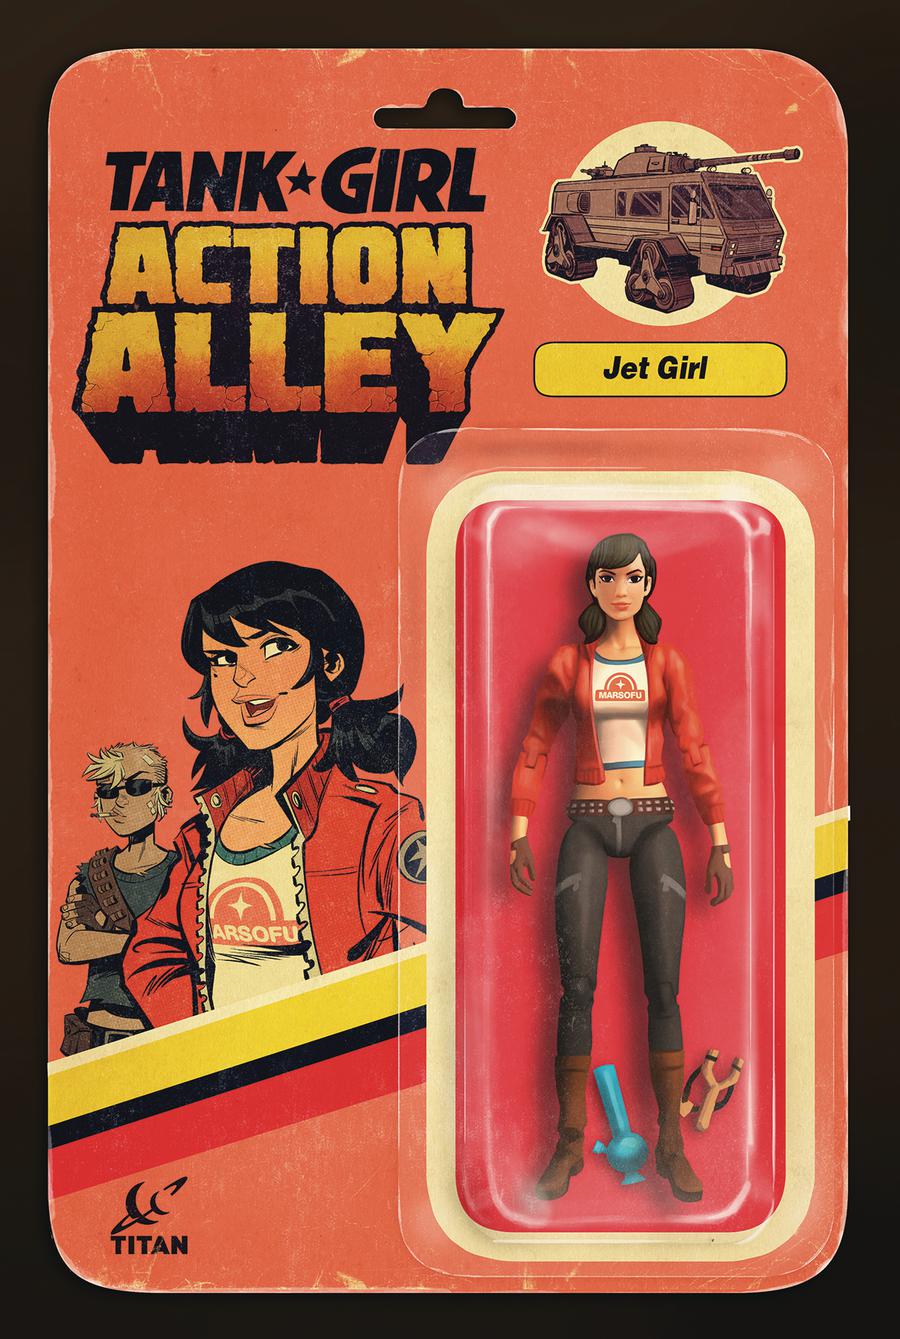 Tank Girl Vol 3 #4 Cover C Variant Jet Girl Action Figure Cover